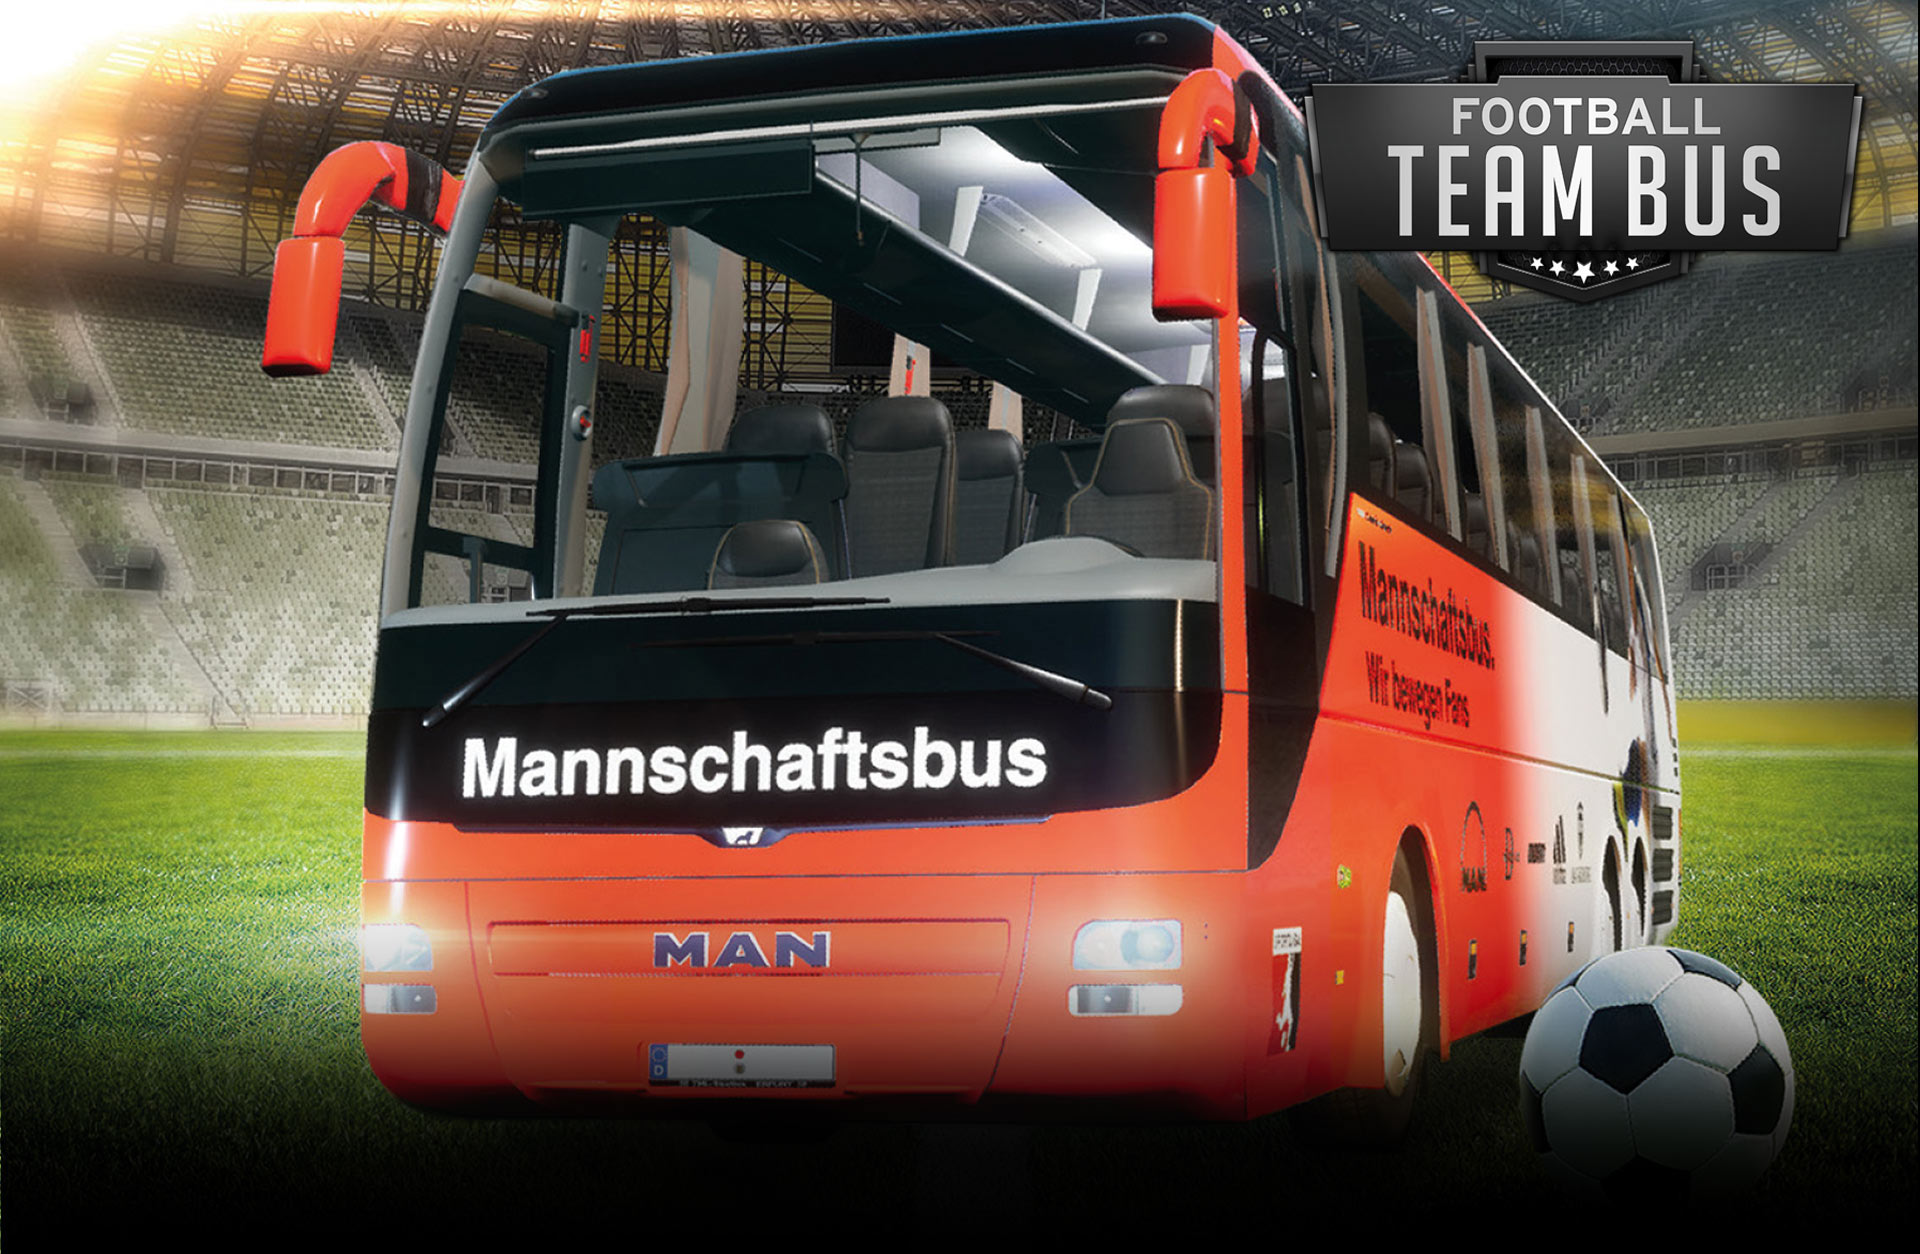 Fernbus Simulator - Football Team Bus (DLC)